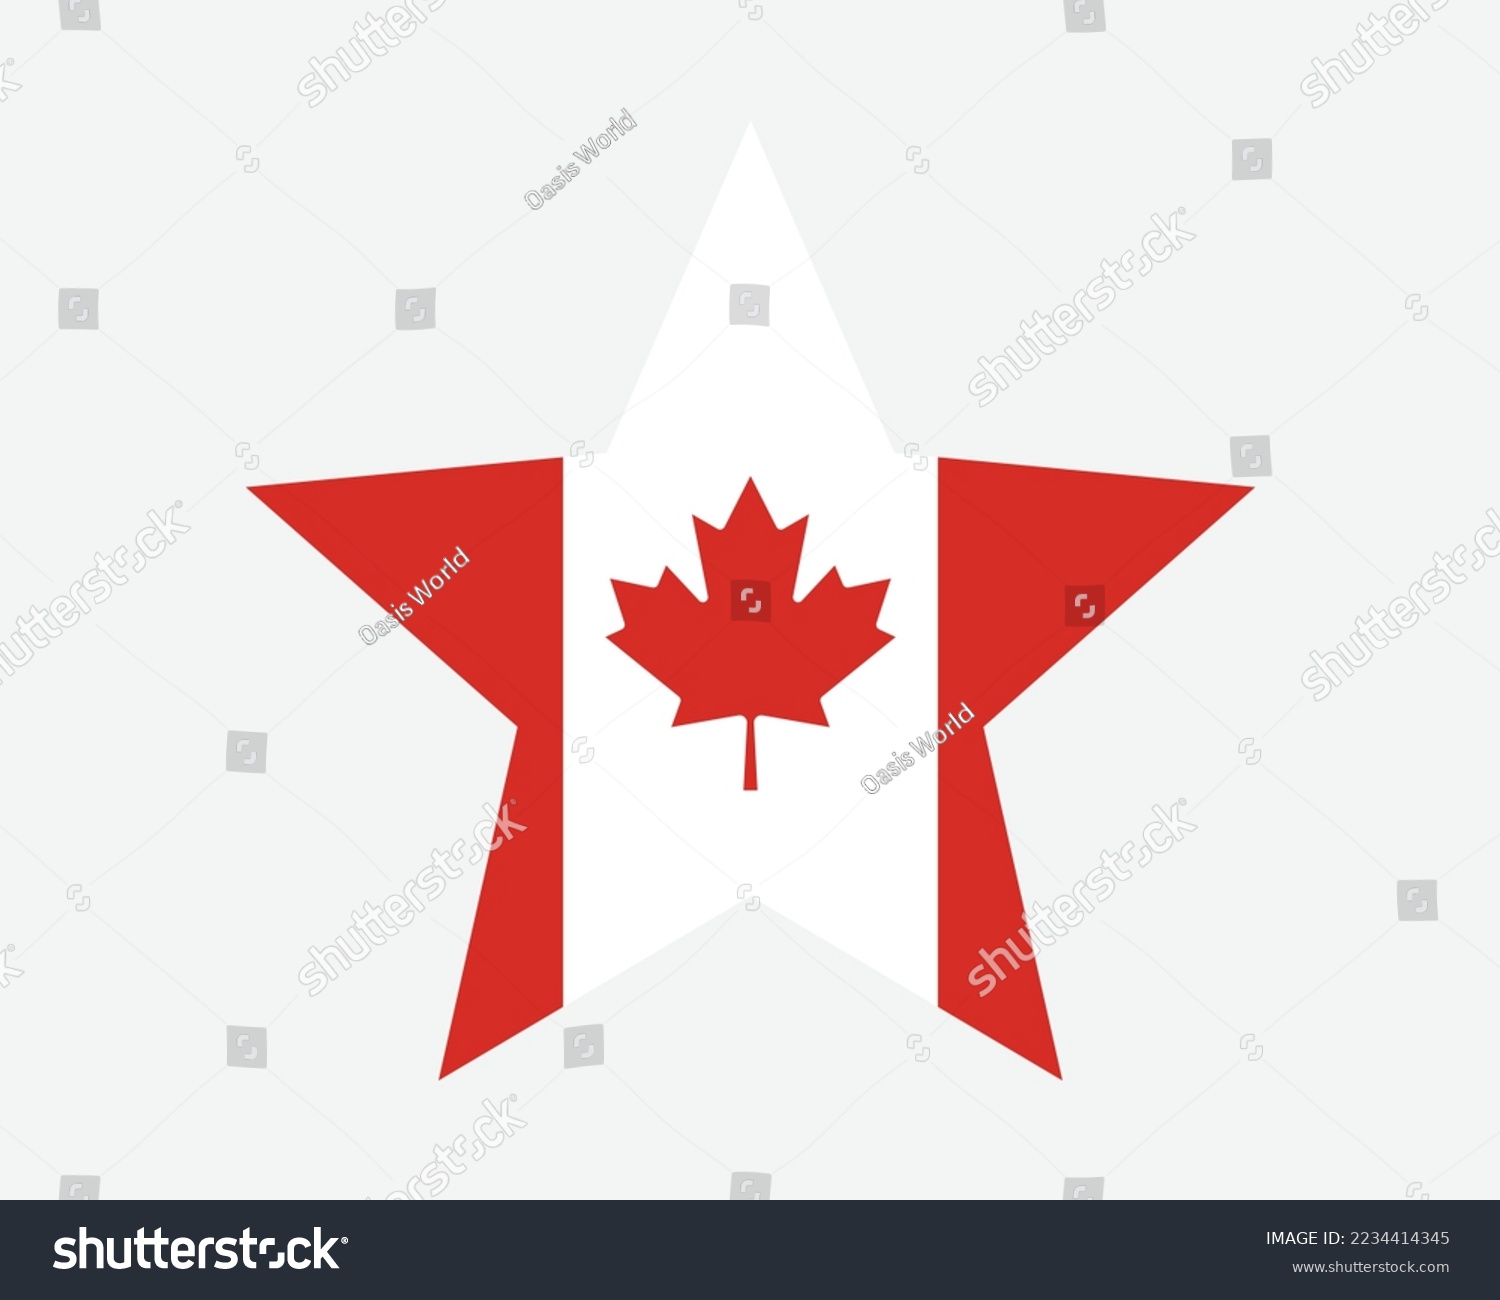 SVG of Canada Star Flag. Canadian Star Shape Flag. Country National Banner Icon Symbol Vector 2D Flat Artwork Graphic Illustration svg